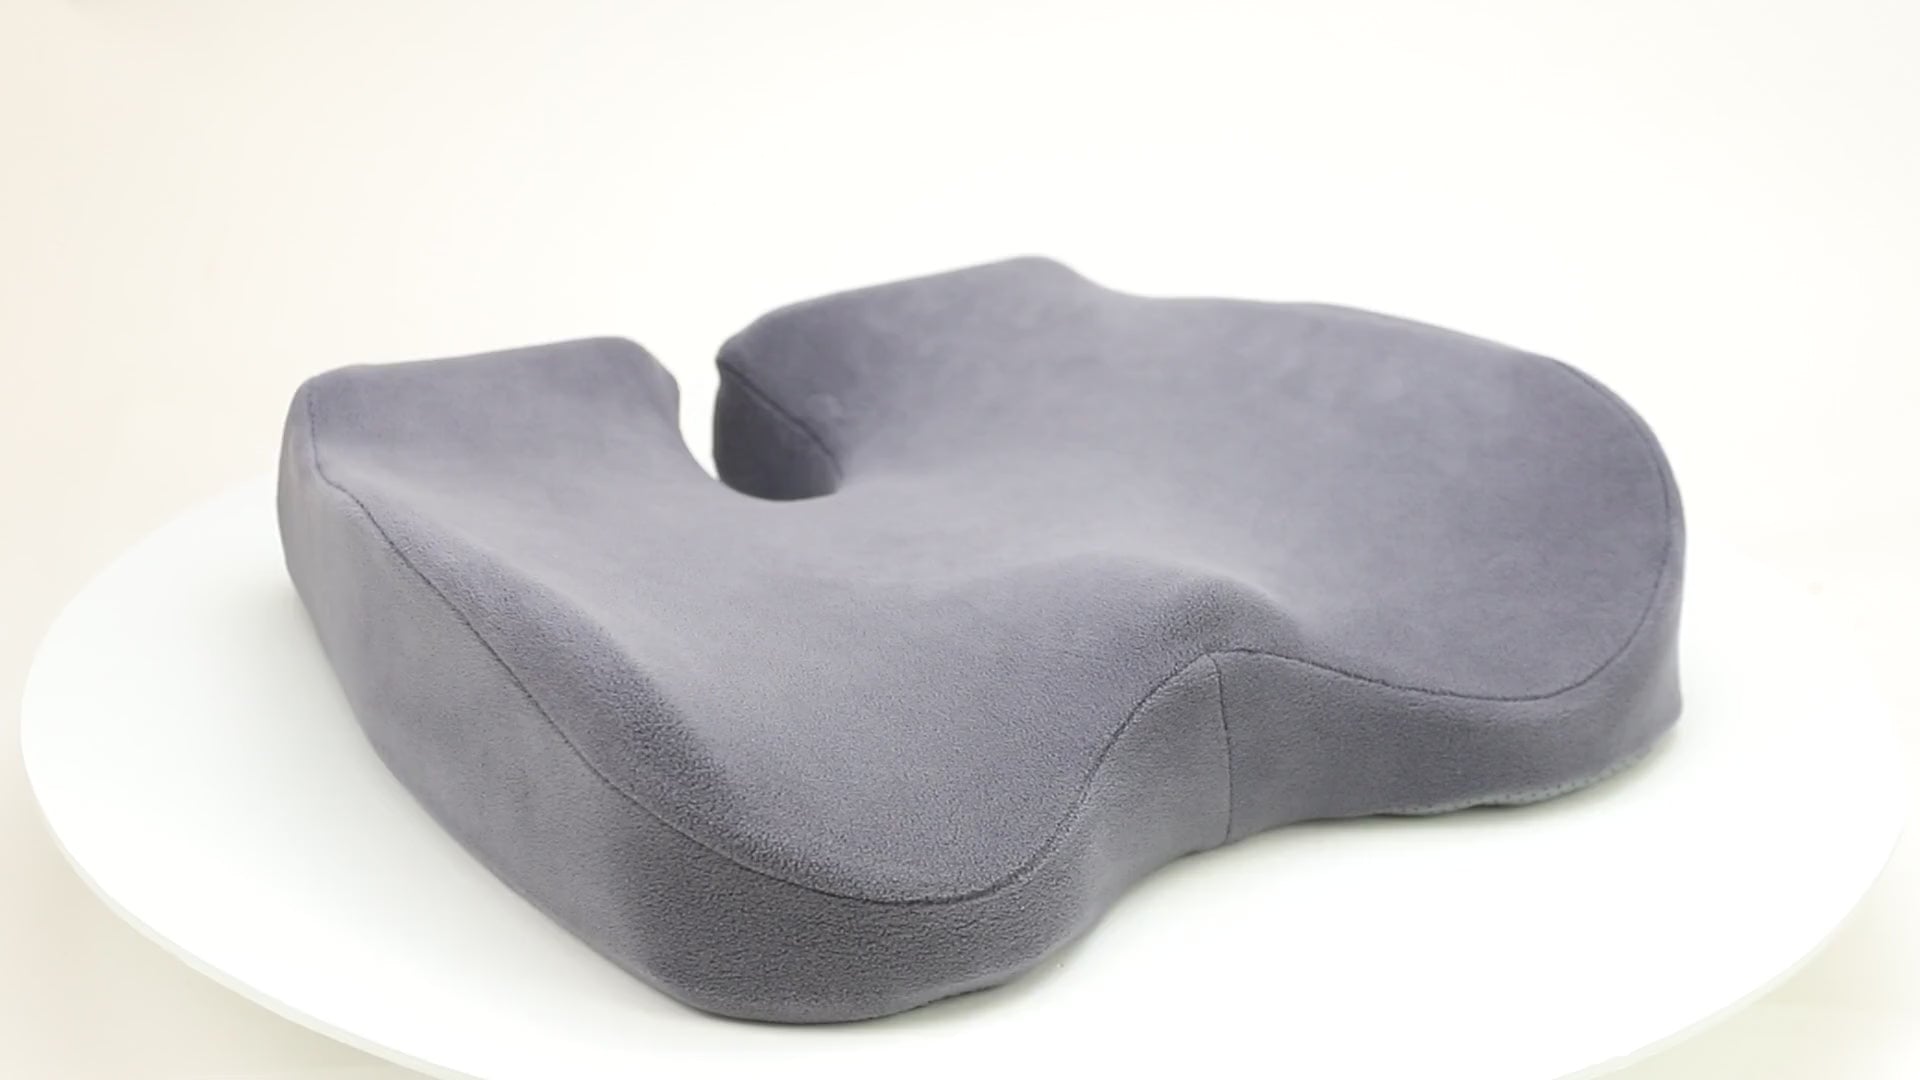 Mind Reader Harmony Collection Ergonomic Seat Cushion, 3H x 17-1/2W x  18D, Black